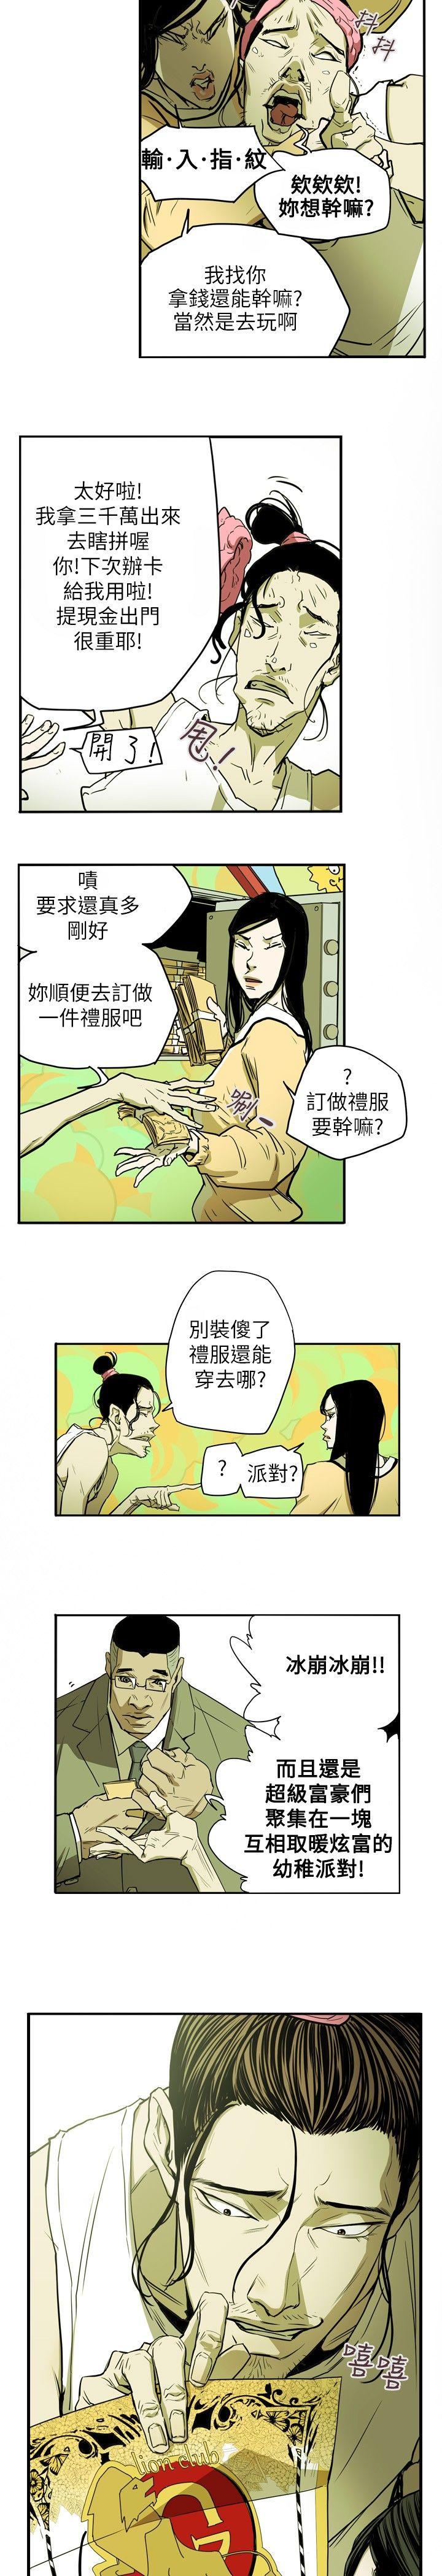 Honey trap 甜蜜陷阱  第32话 漫画图片8.jpg